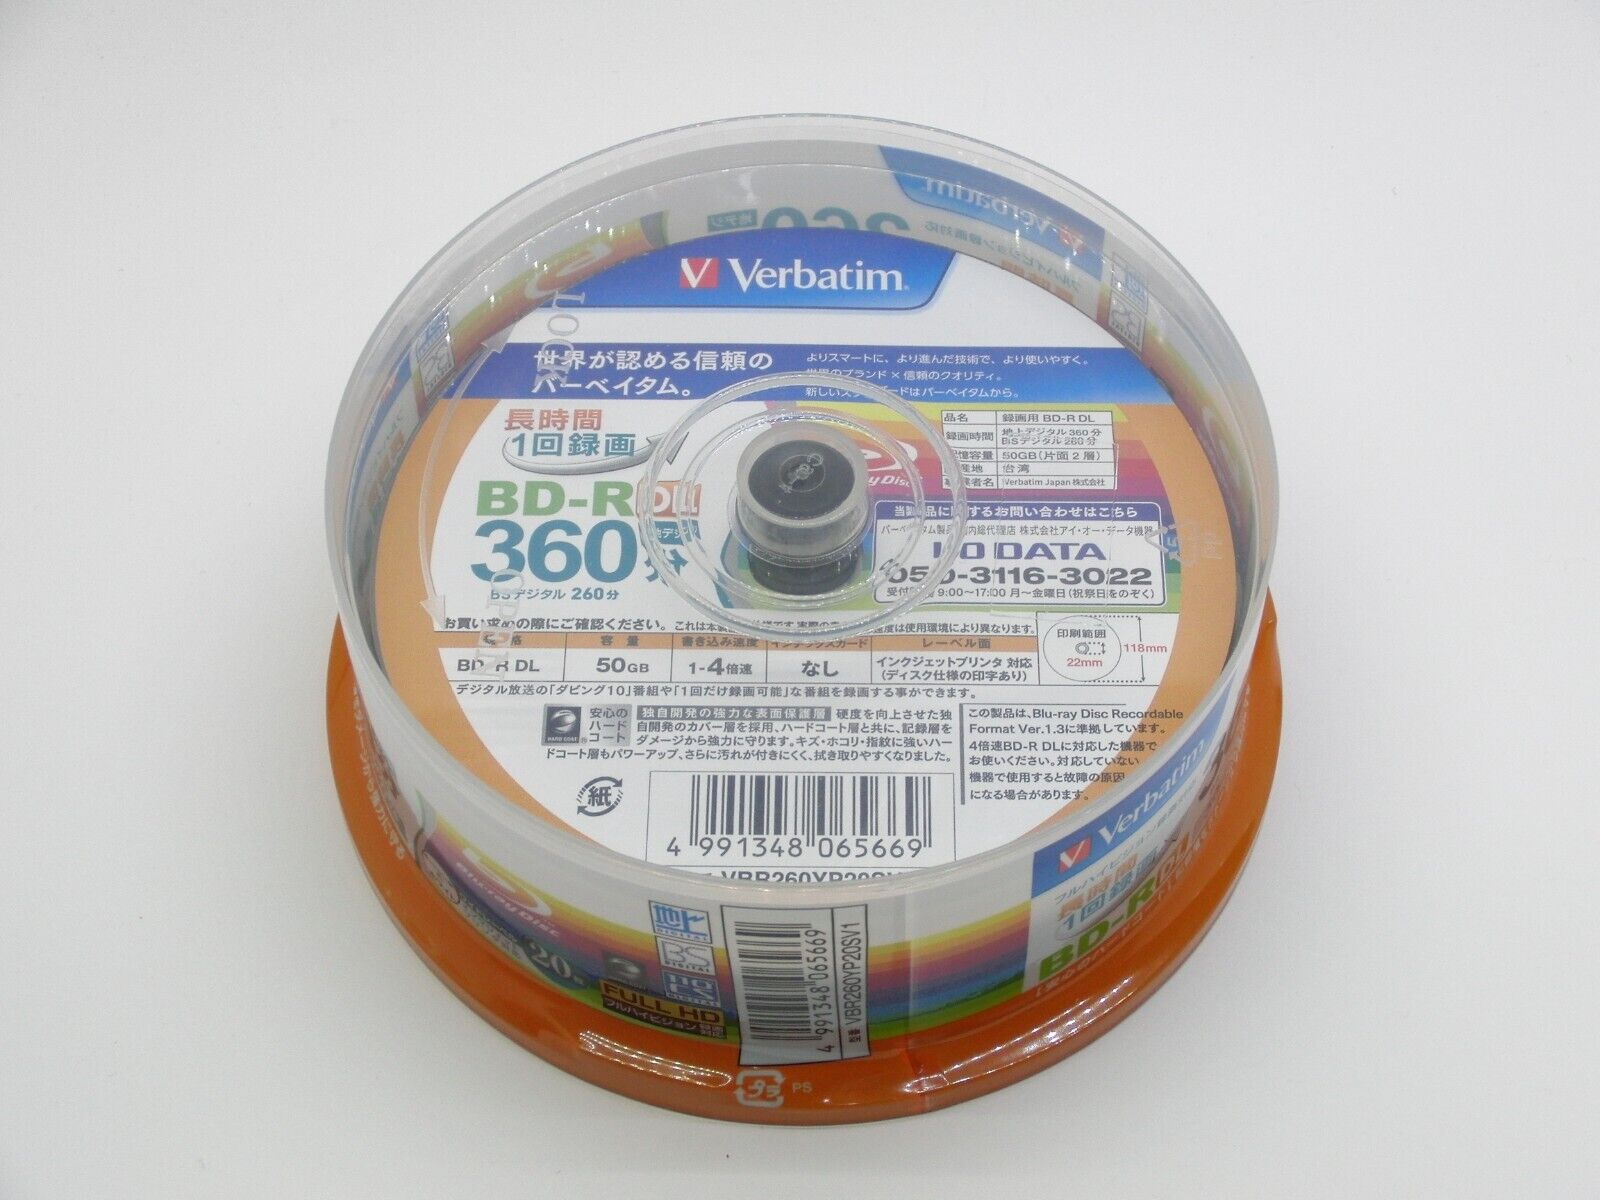 Verbatim VBR260YP20SV1 Blank Blu-ray Disc BD-R DL 50GB 20 Disc New 